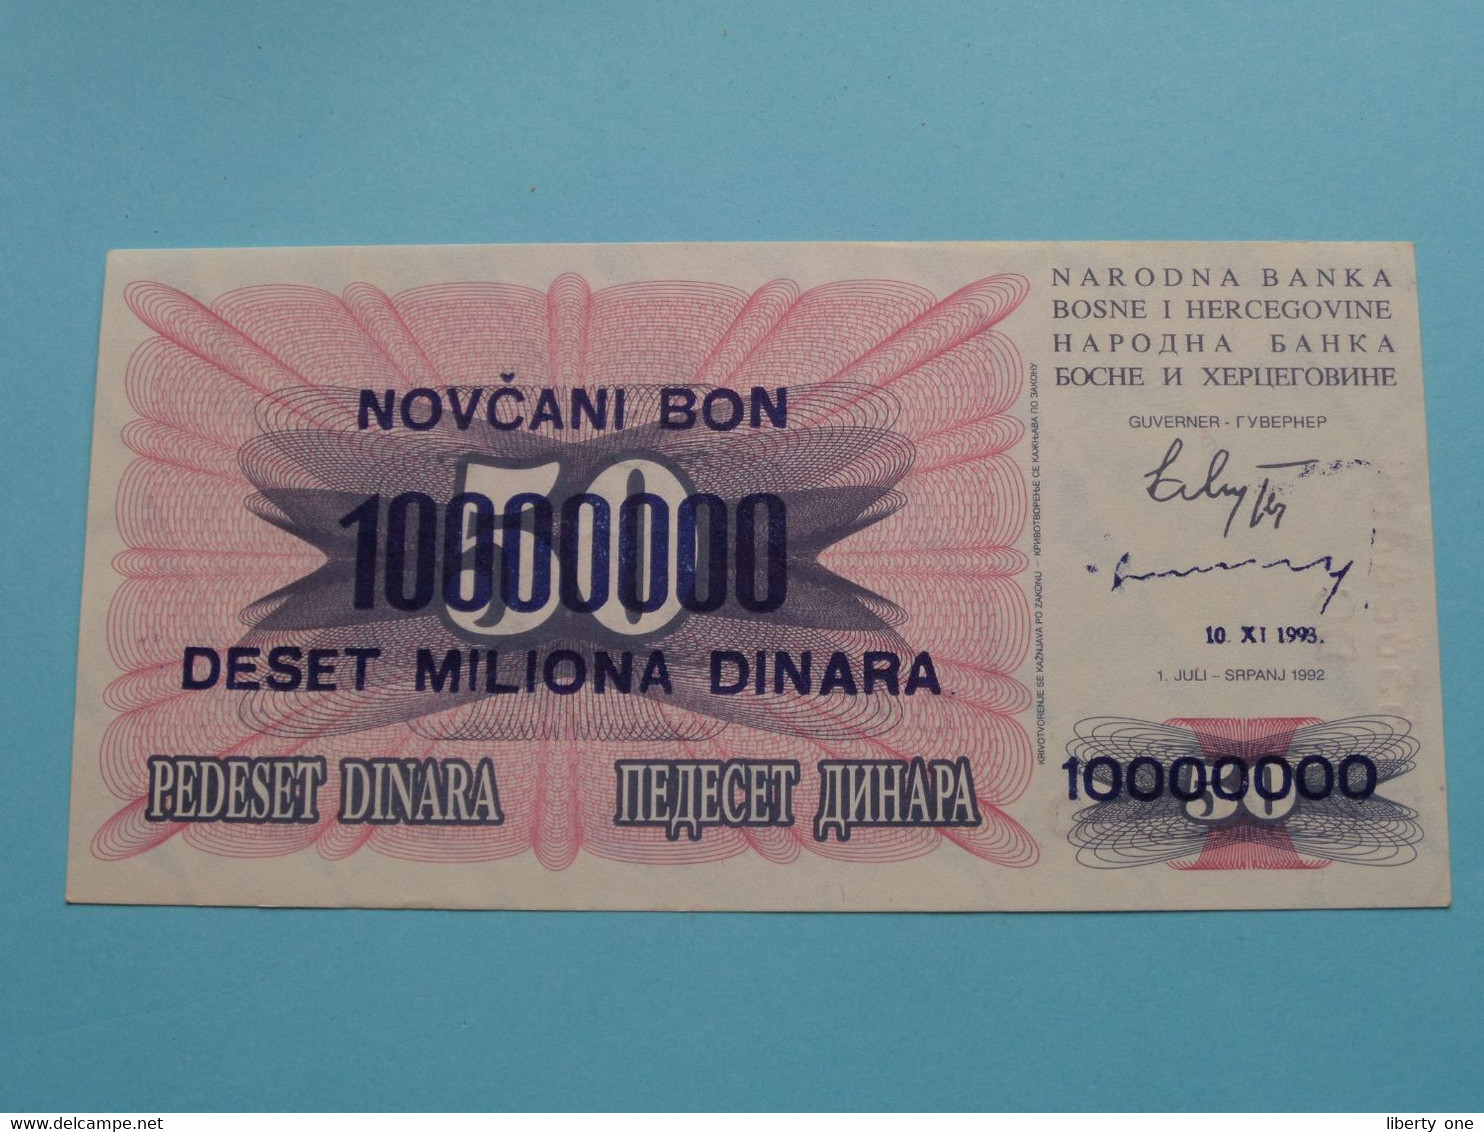 10 000 000 Deset Miliona Dinara ( FD55828824 / DC ) Bosne I Hercegovine - 10-XI-1993 ( Voir / See > Scans ) UNC ! - Bosnia And Herzegovina